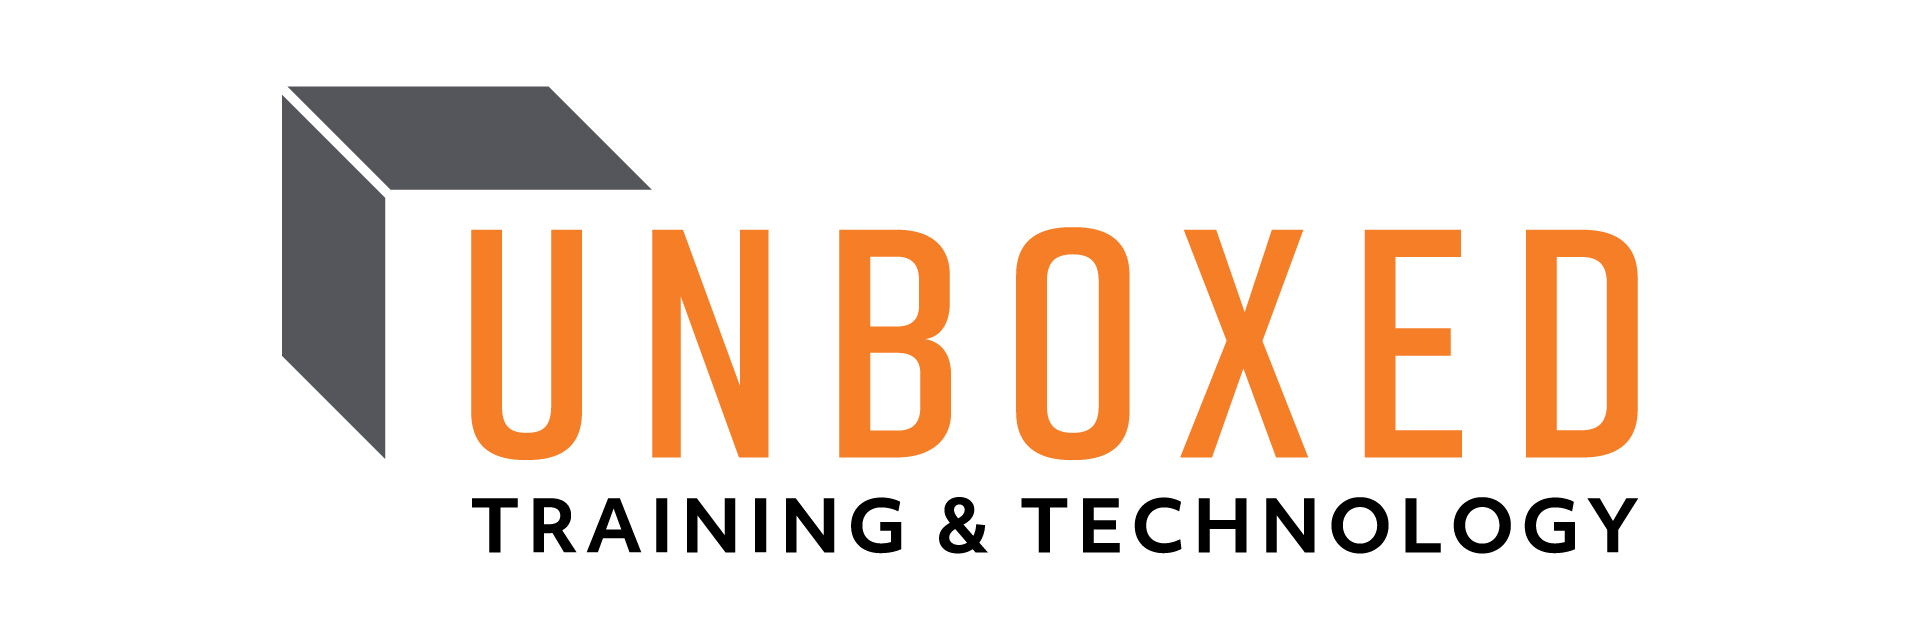 Unboxed Technology logo